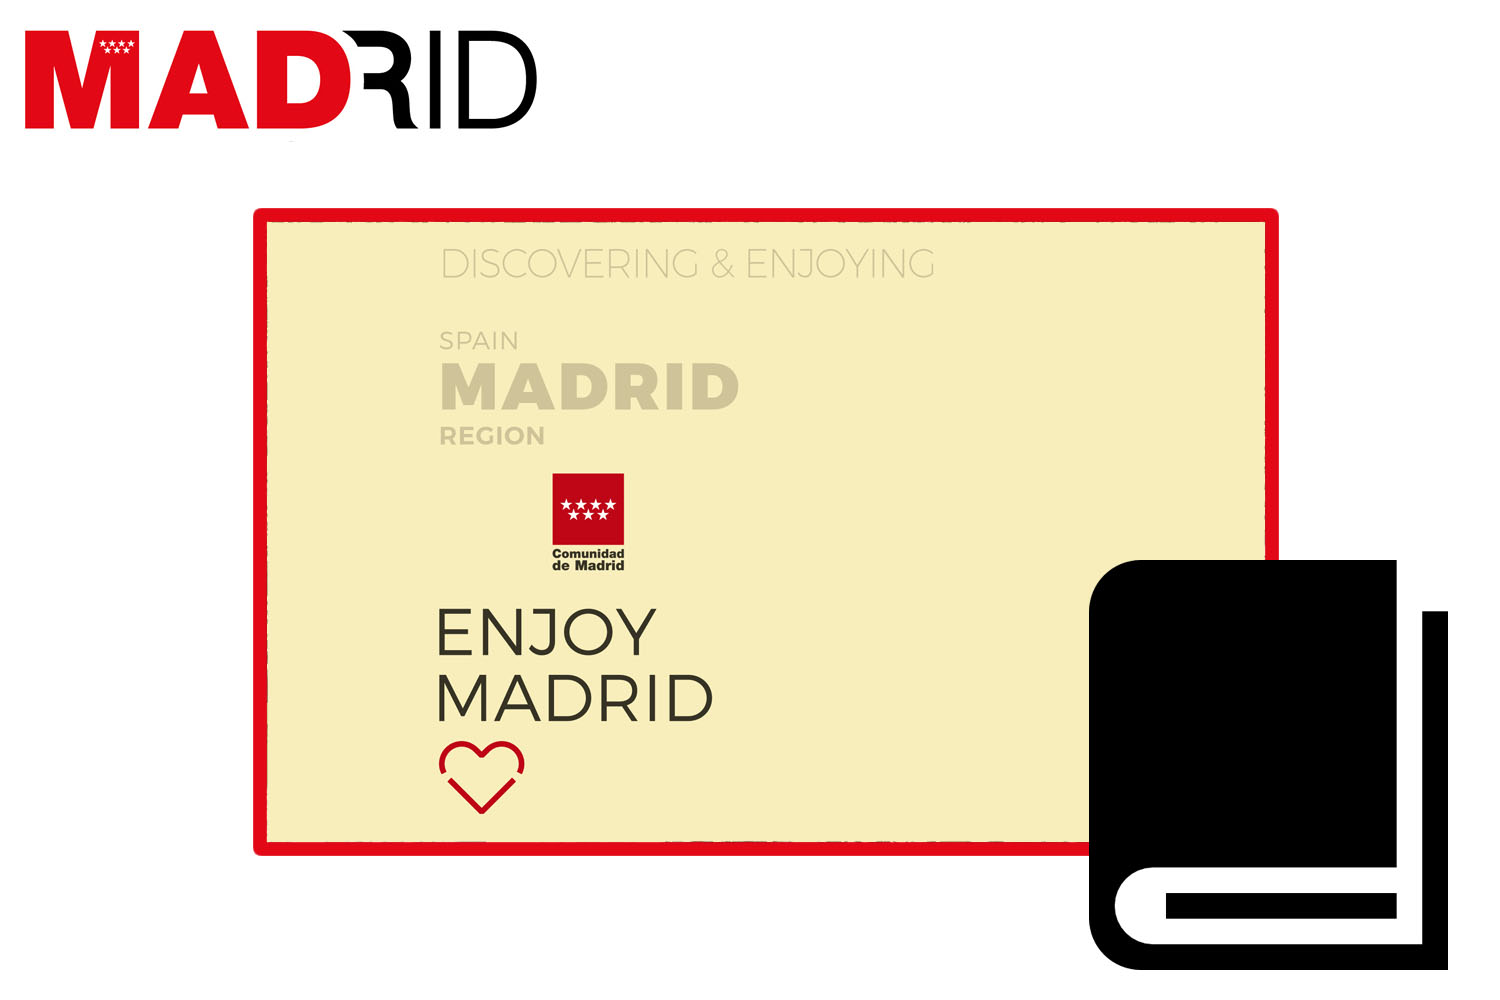 Region of Madrid. Enjoy Madrid